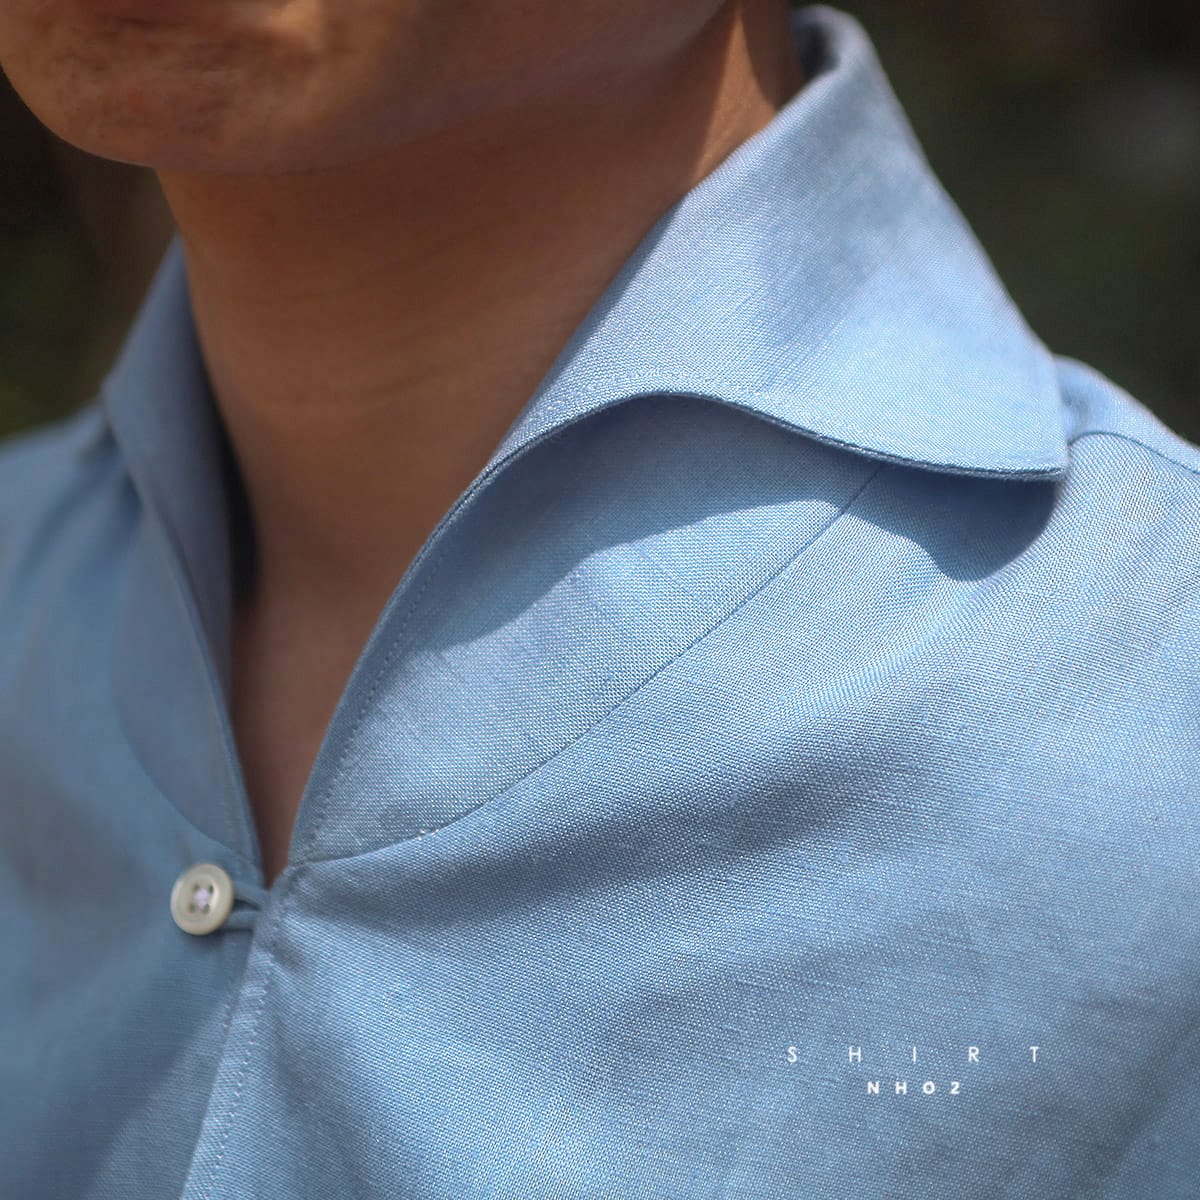 NHO2定制蓝色亚麻渔夫领衬衫